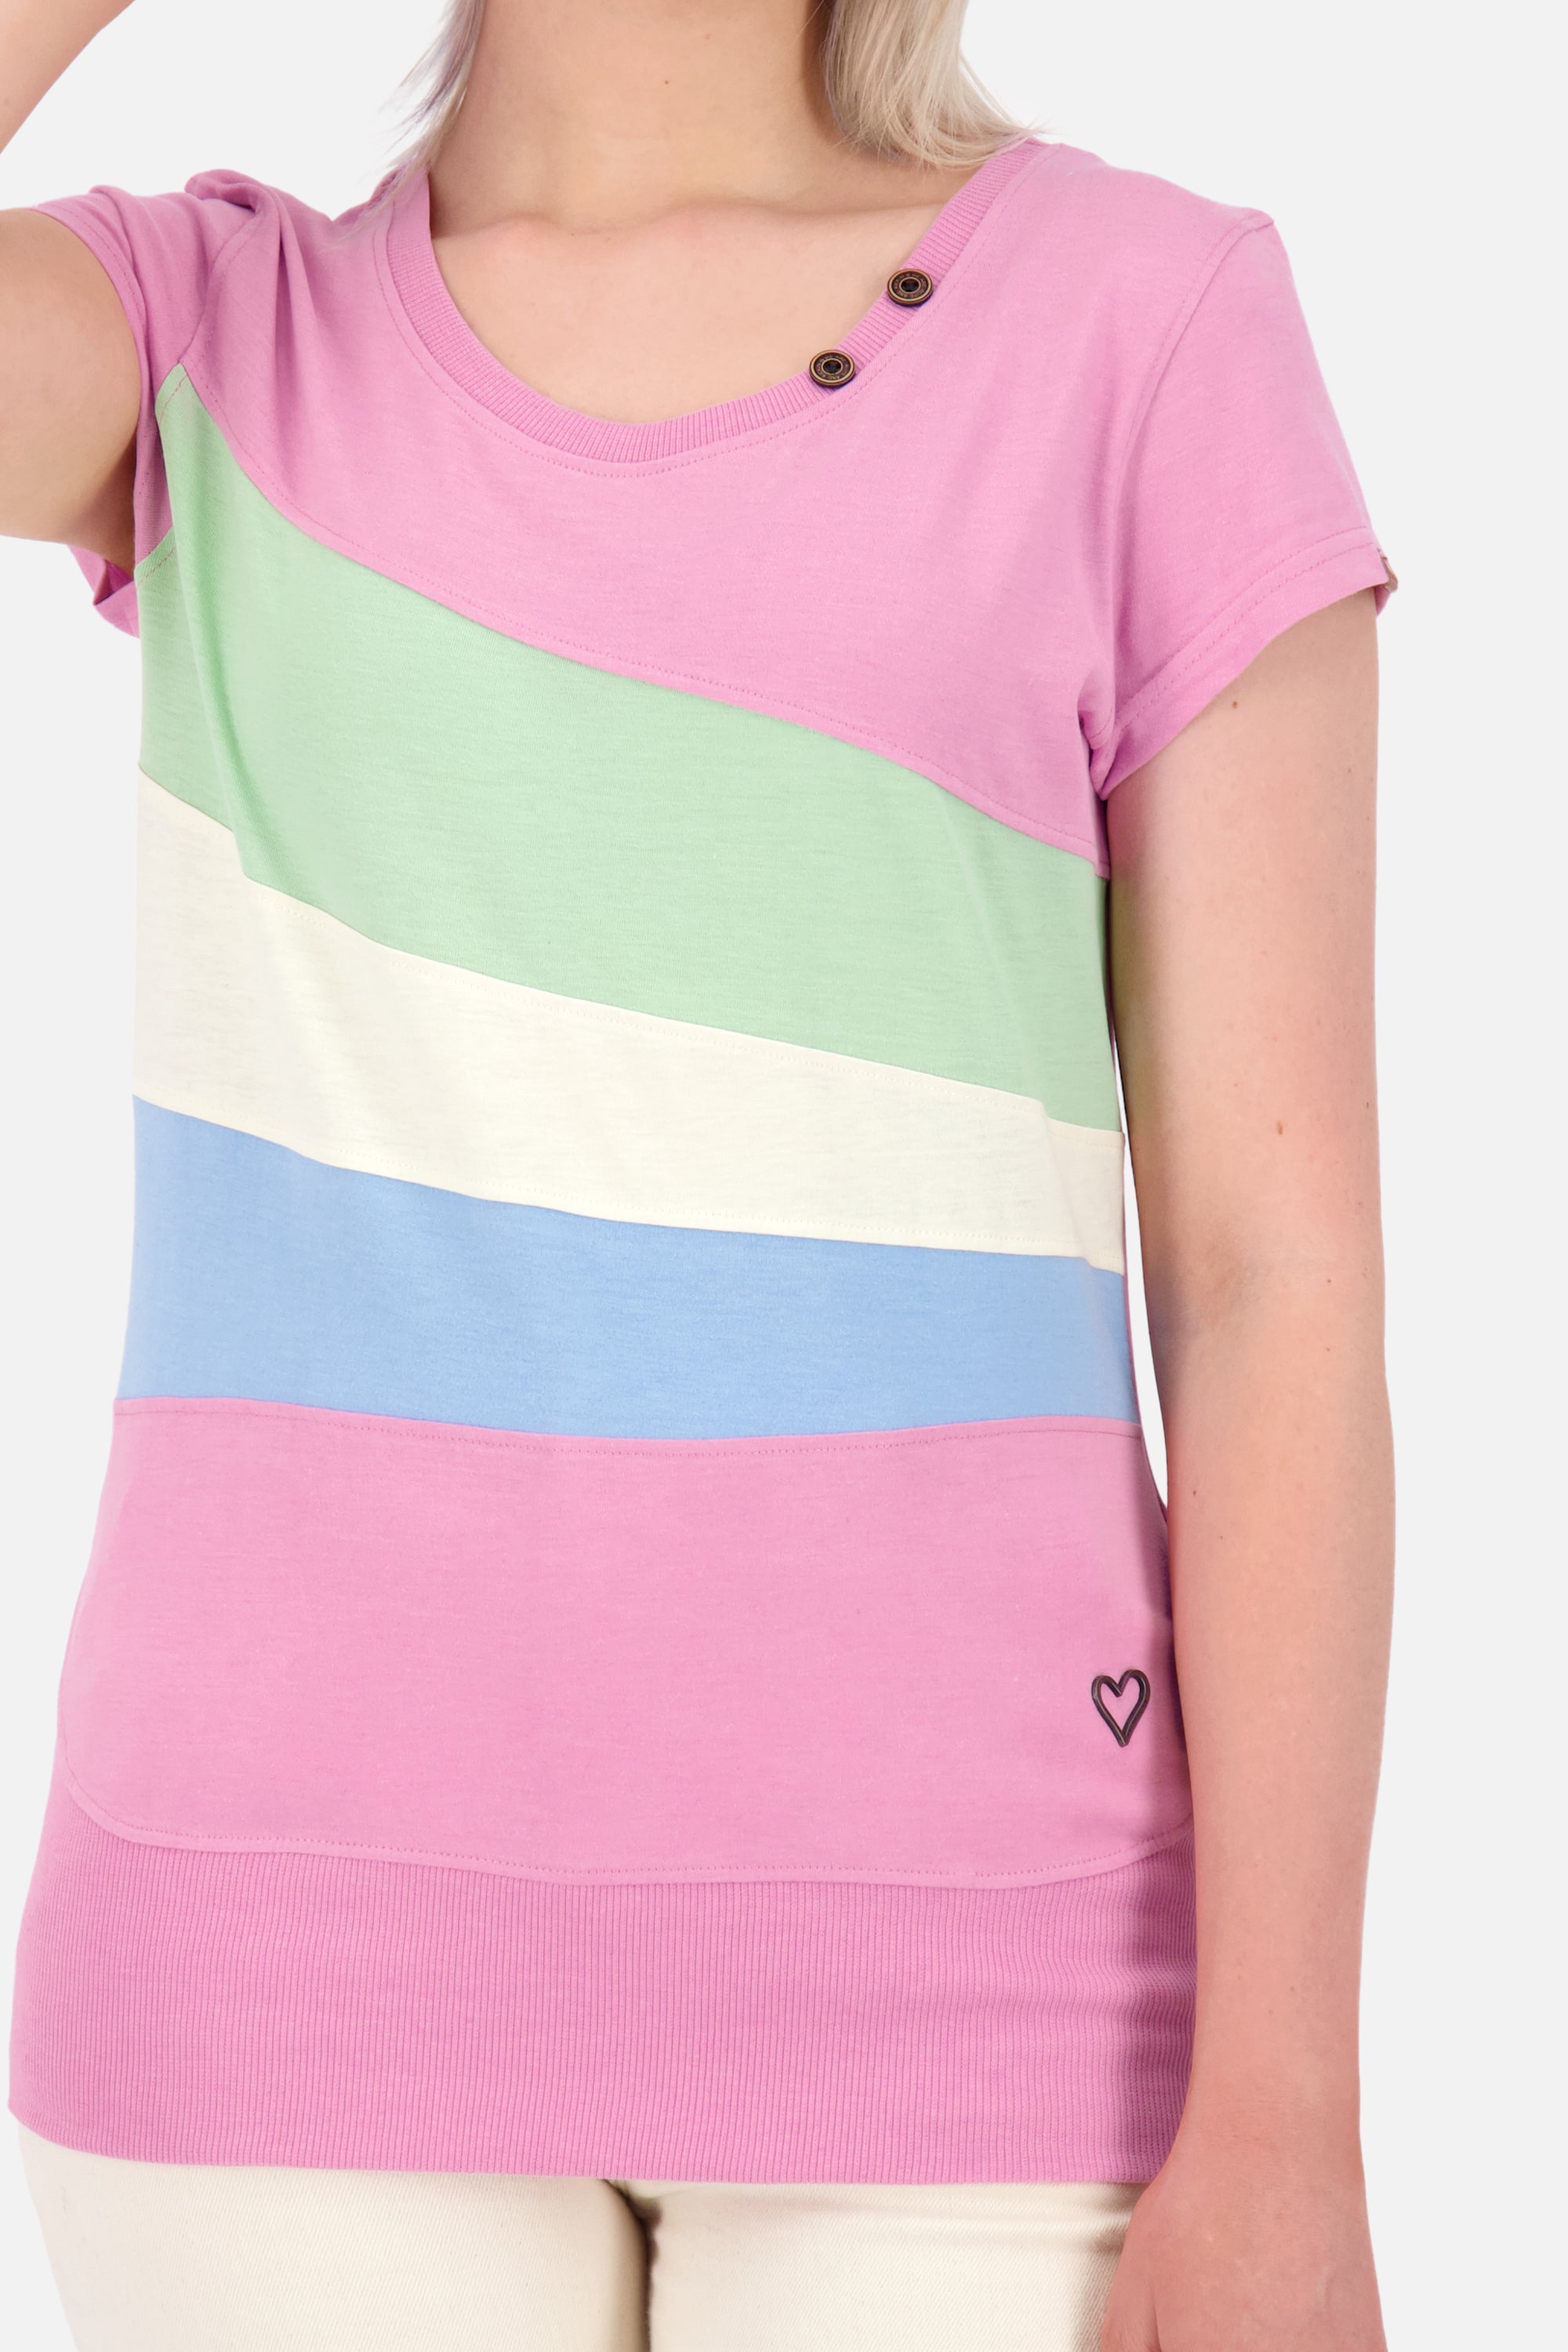 ClementinaAK A T-Shirt Damen - Trendpiece für den Sommer Pink